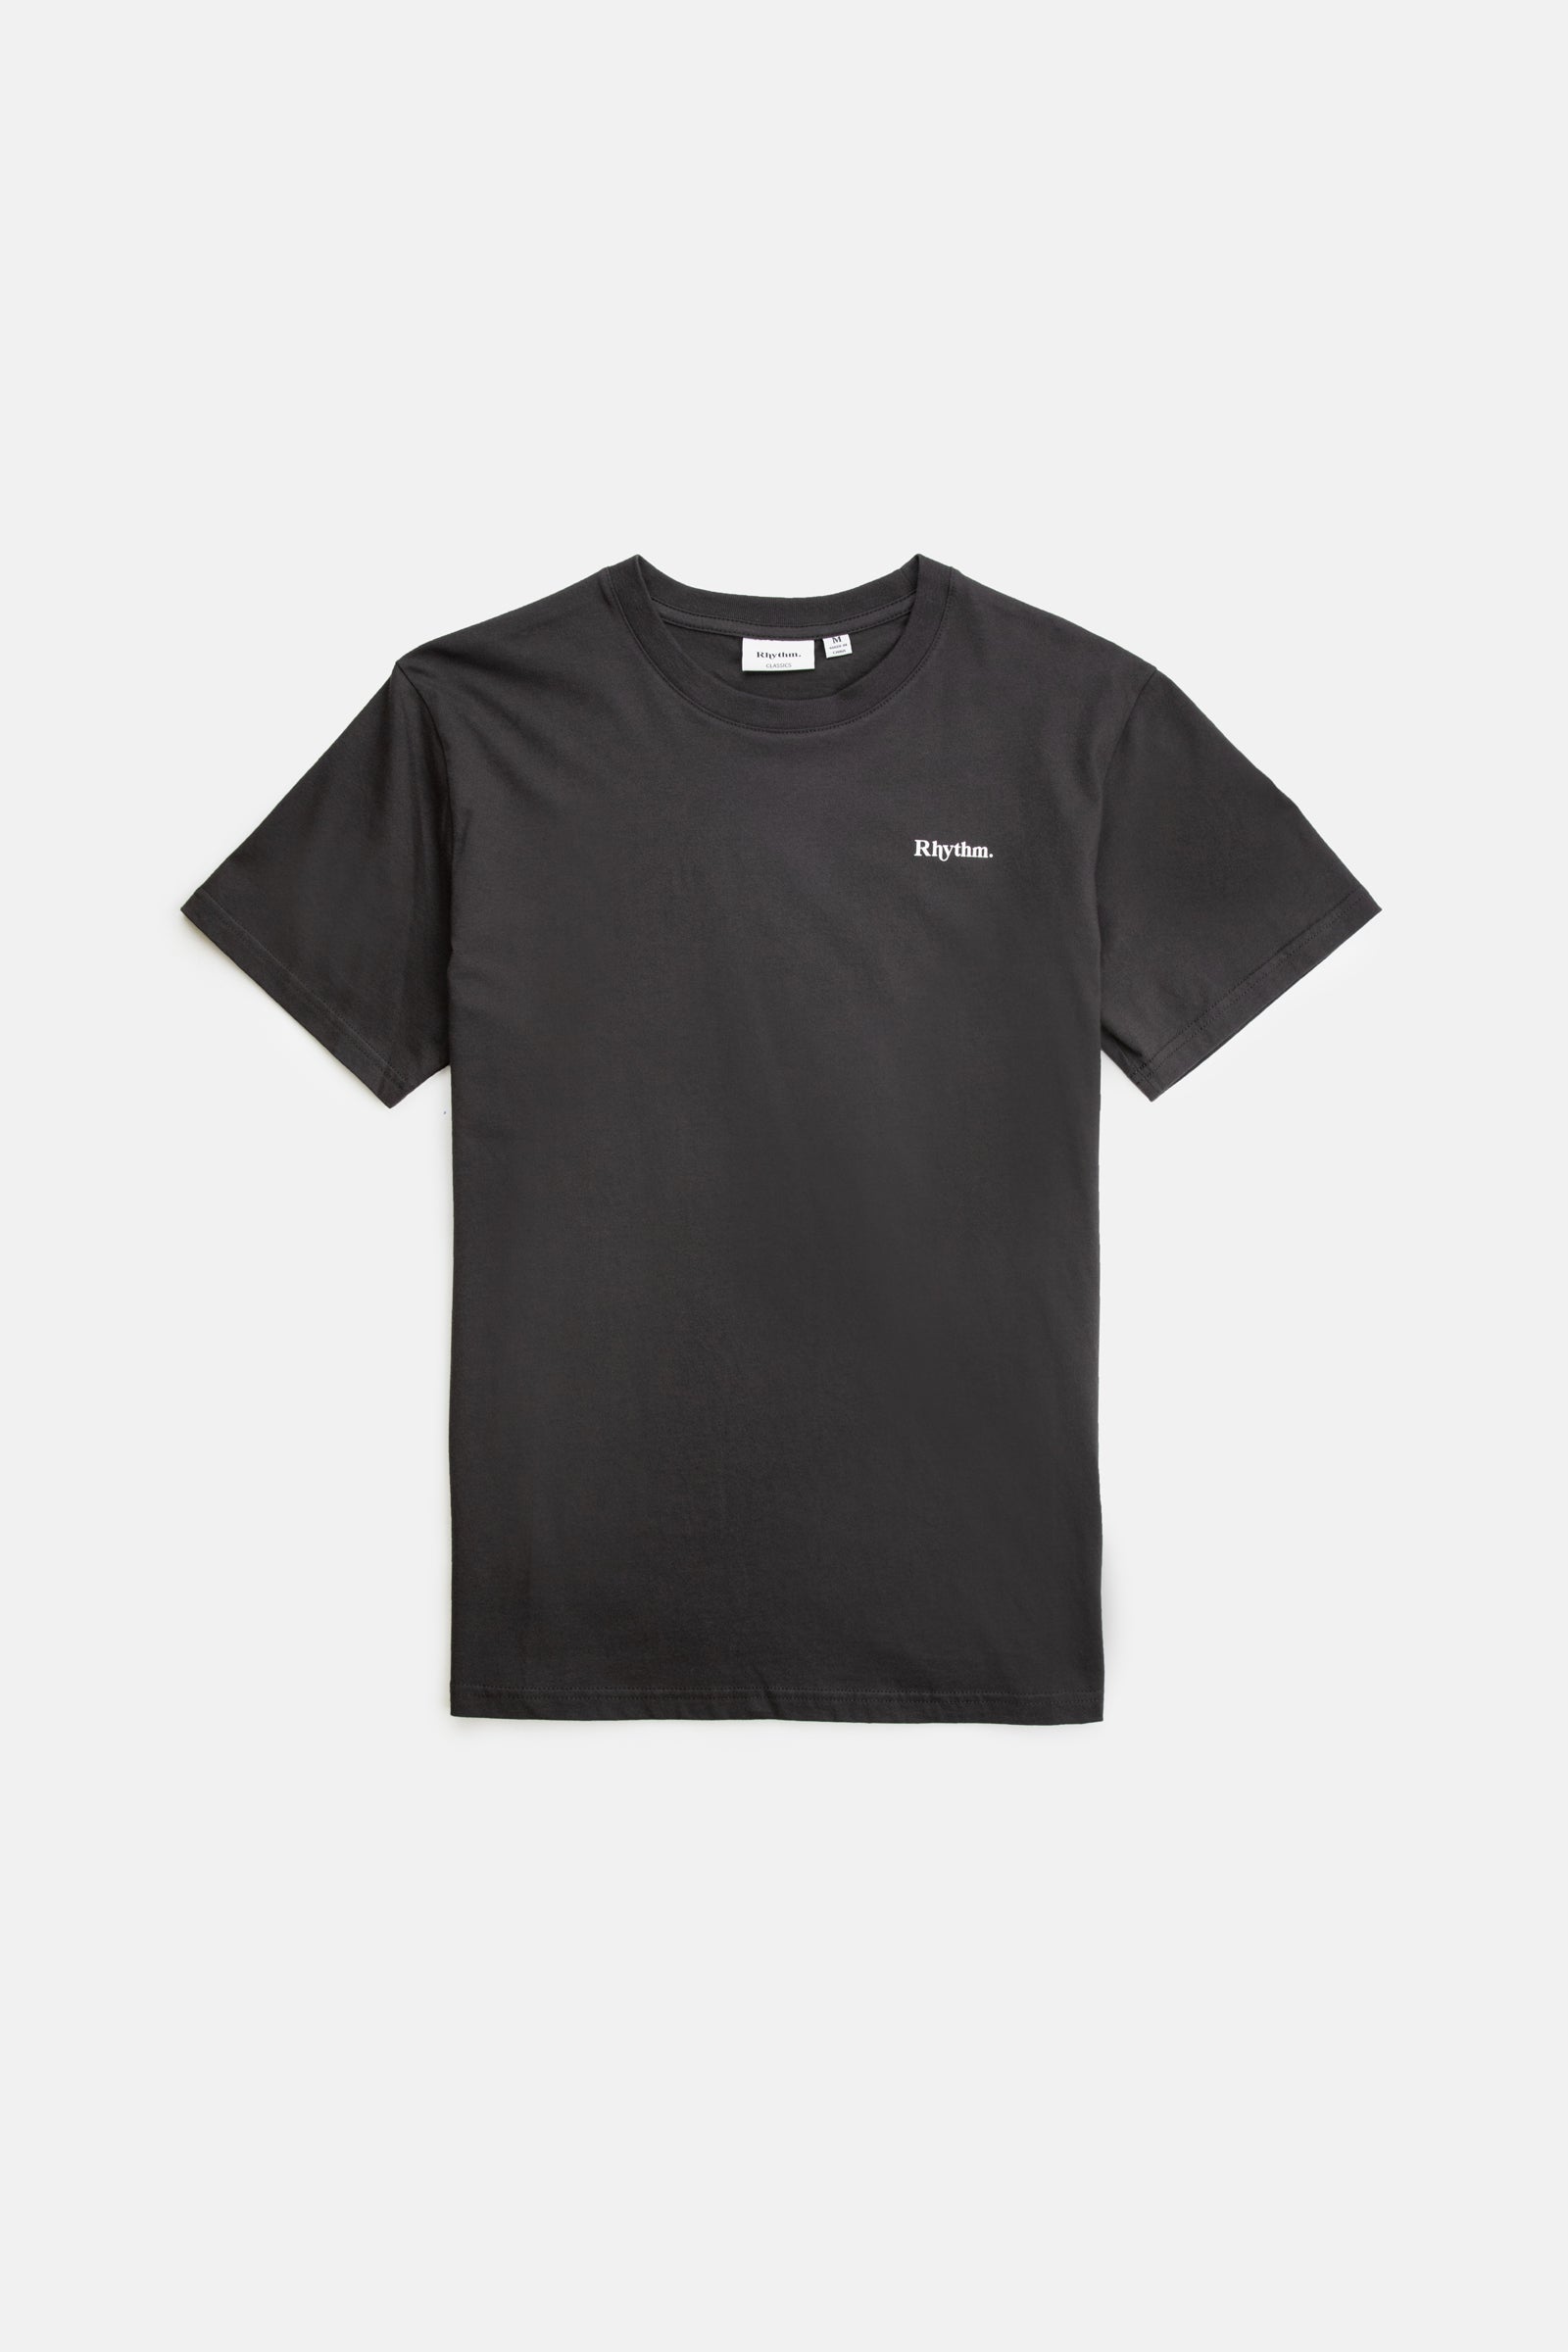 Organic Cotton Standard – EU Black T-Shirt Script Logo Rhythm